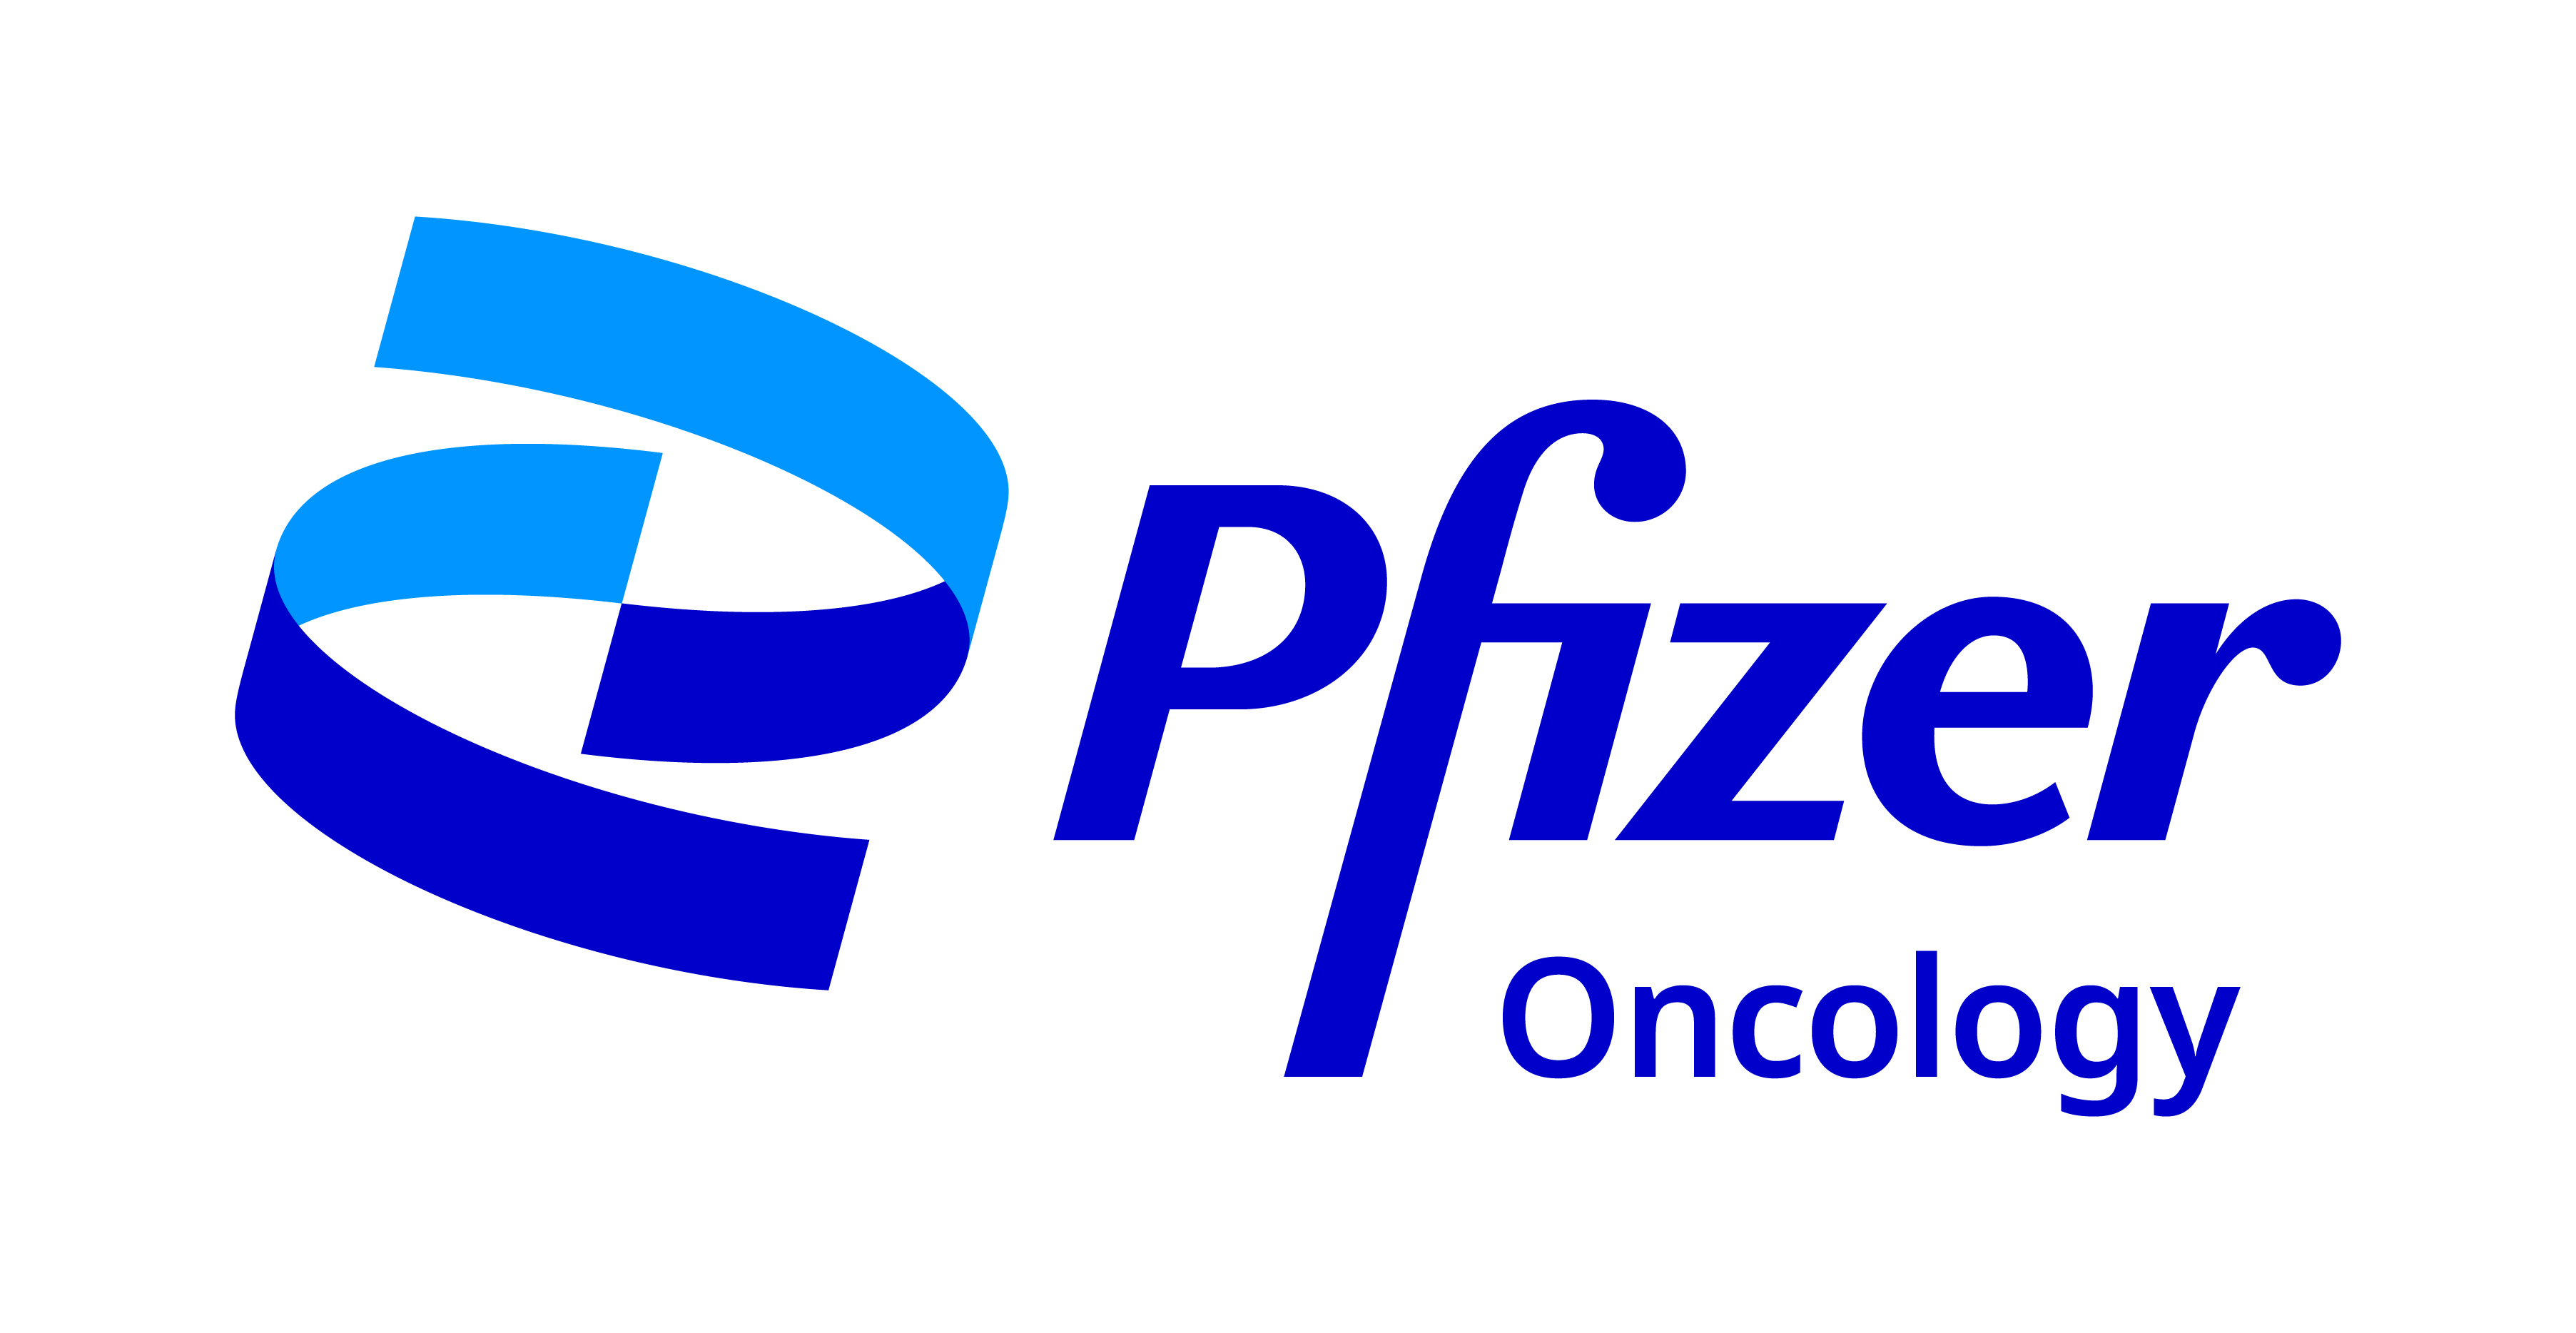 Pfizer UK